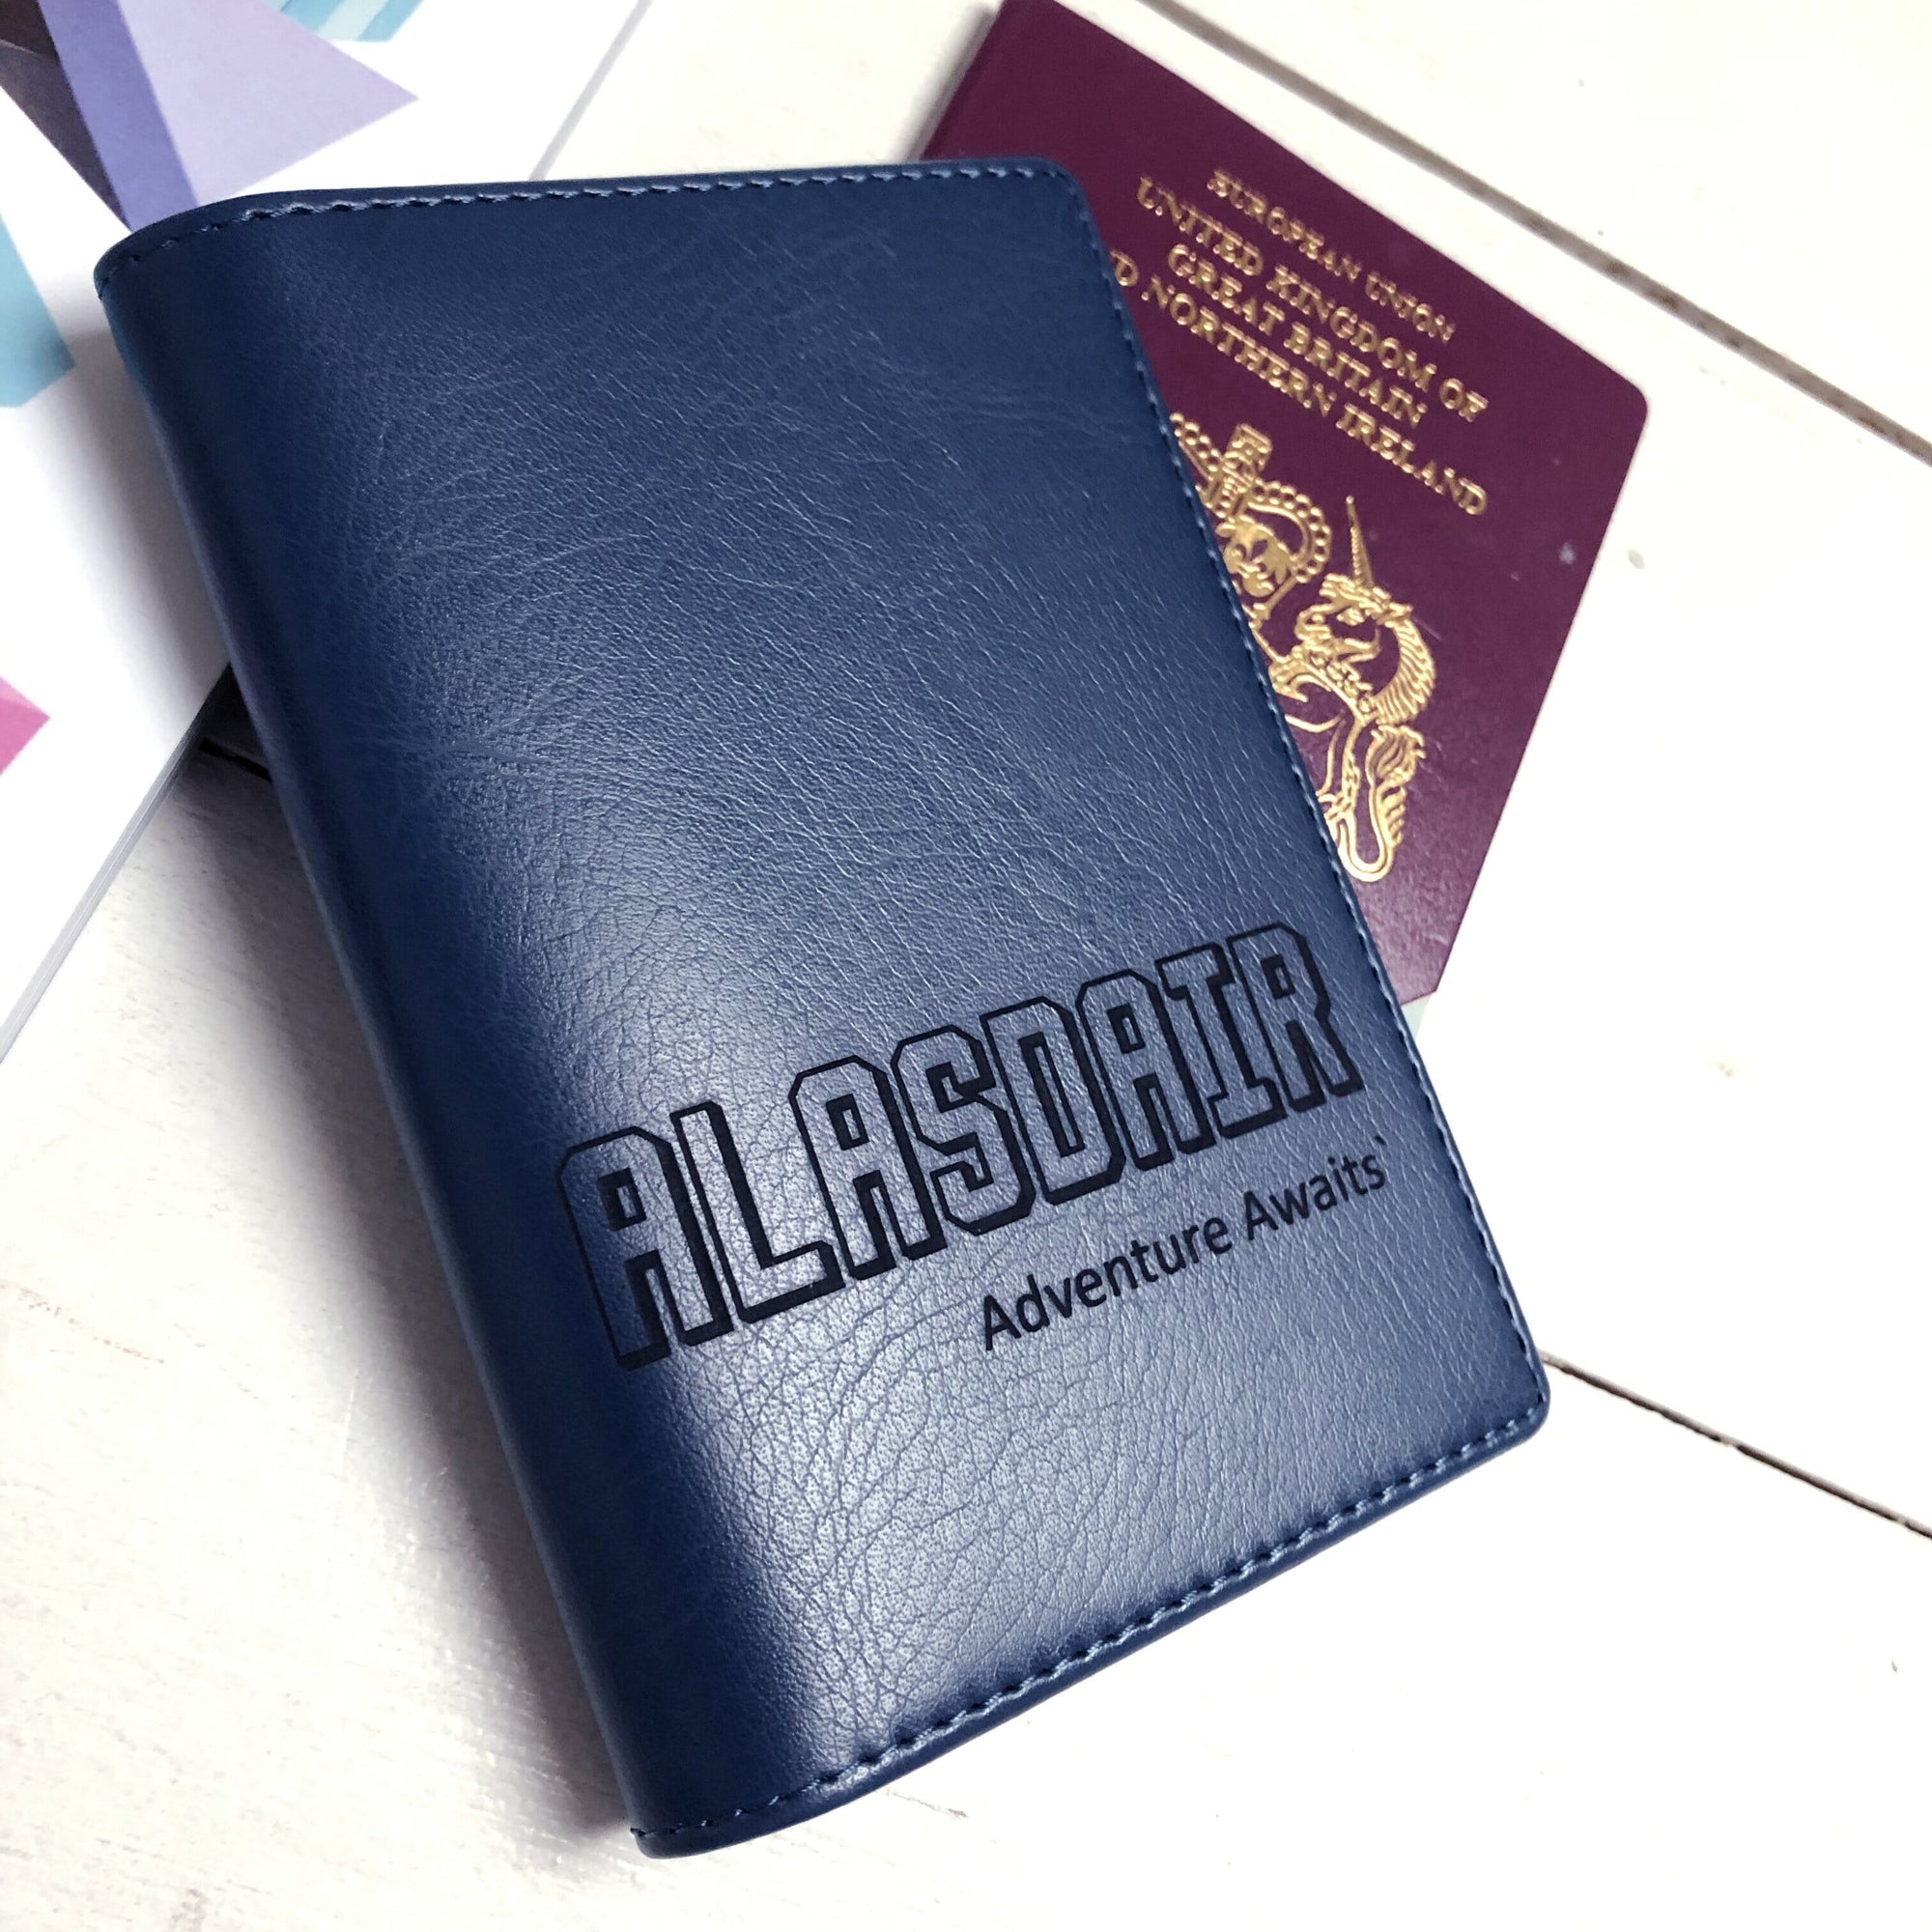 Passport - Personalised Clearance Passport Cover - Alasdair-Gift-Betsy Benn